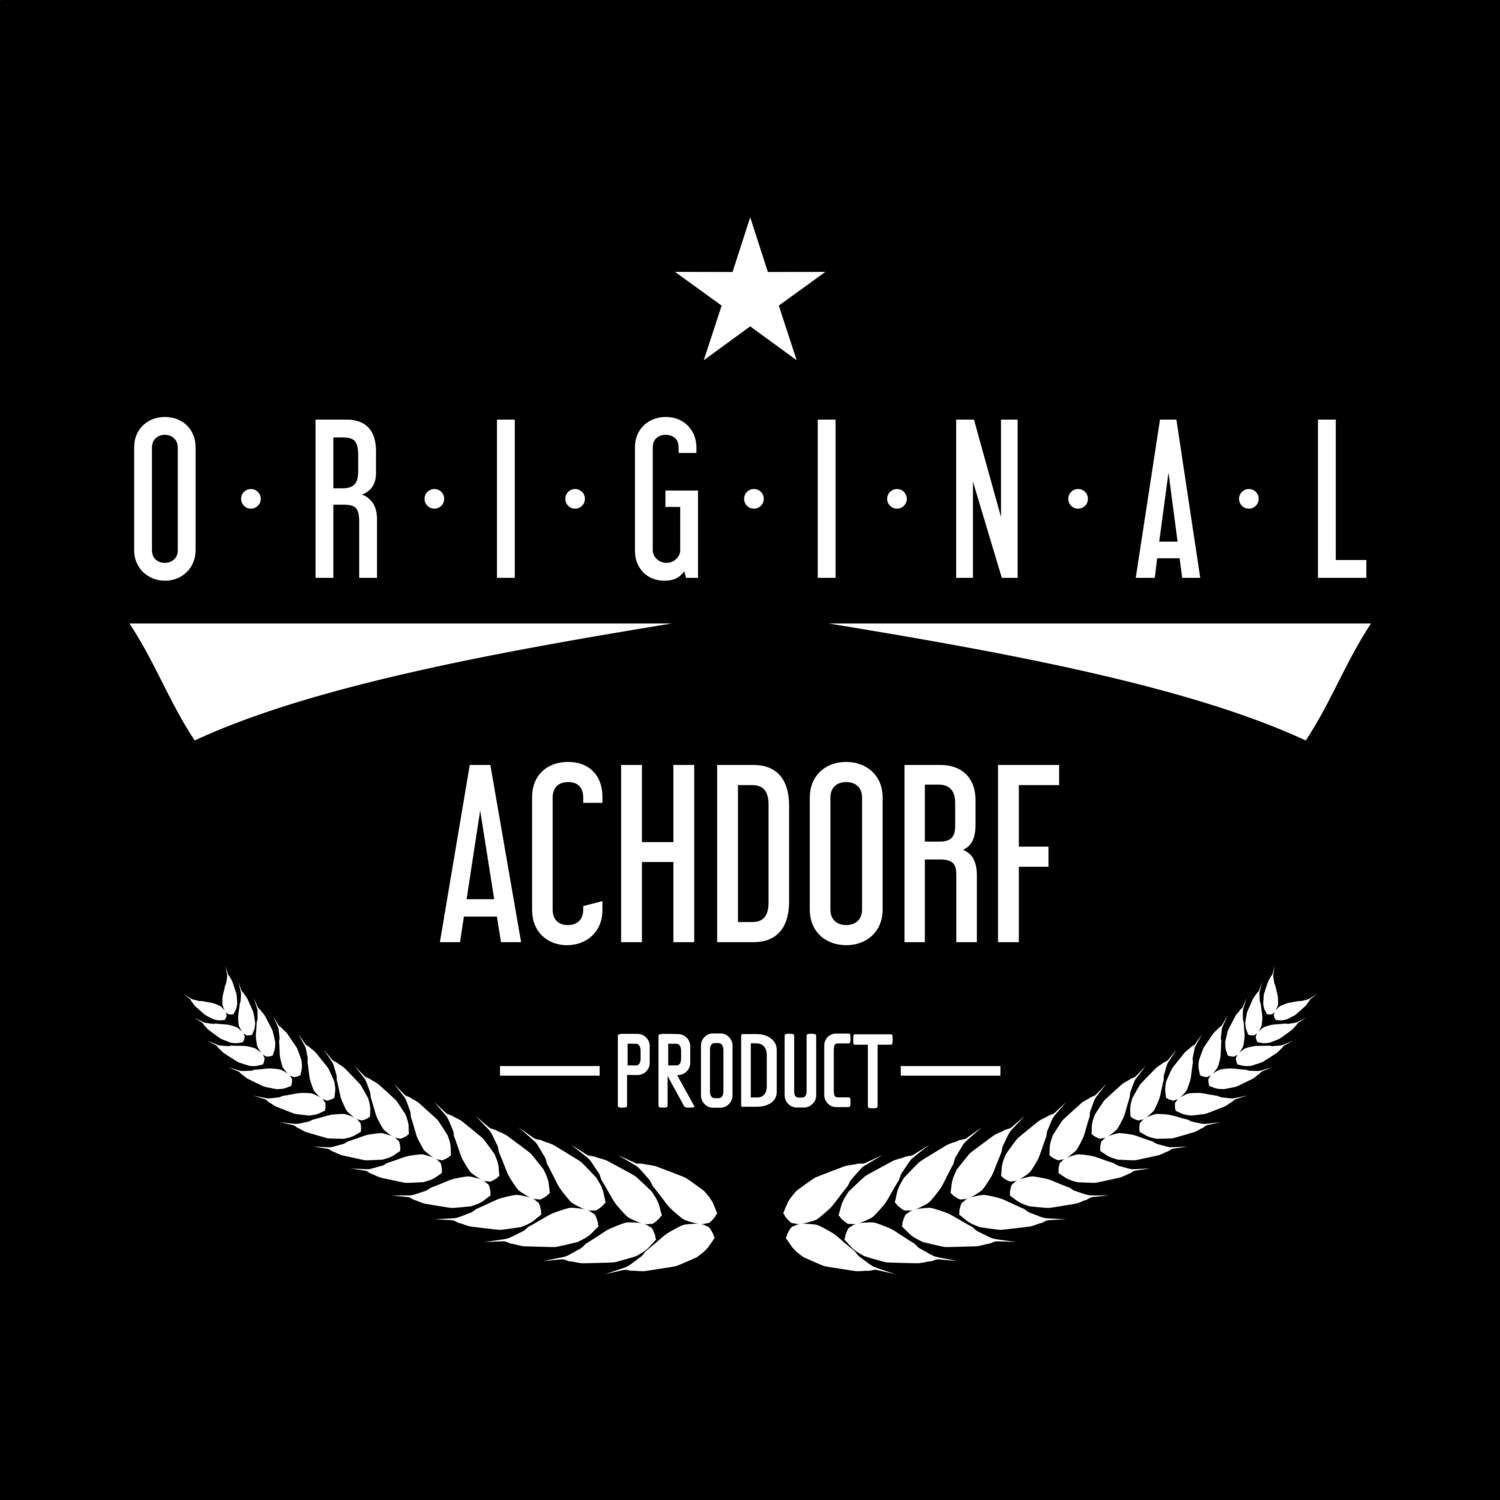 Achdorf T-Shirt »Original Product«